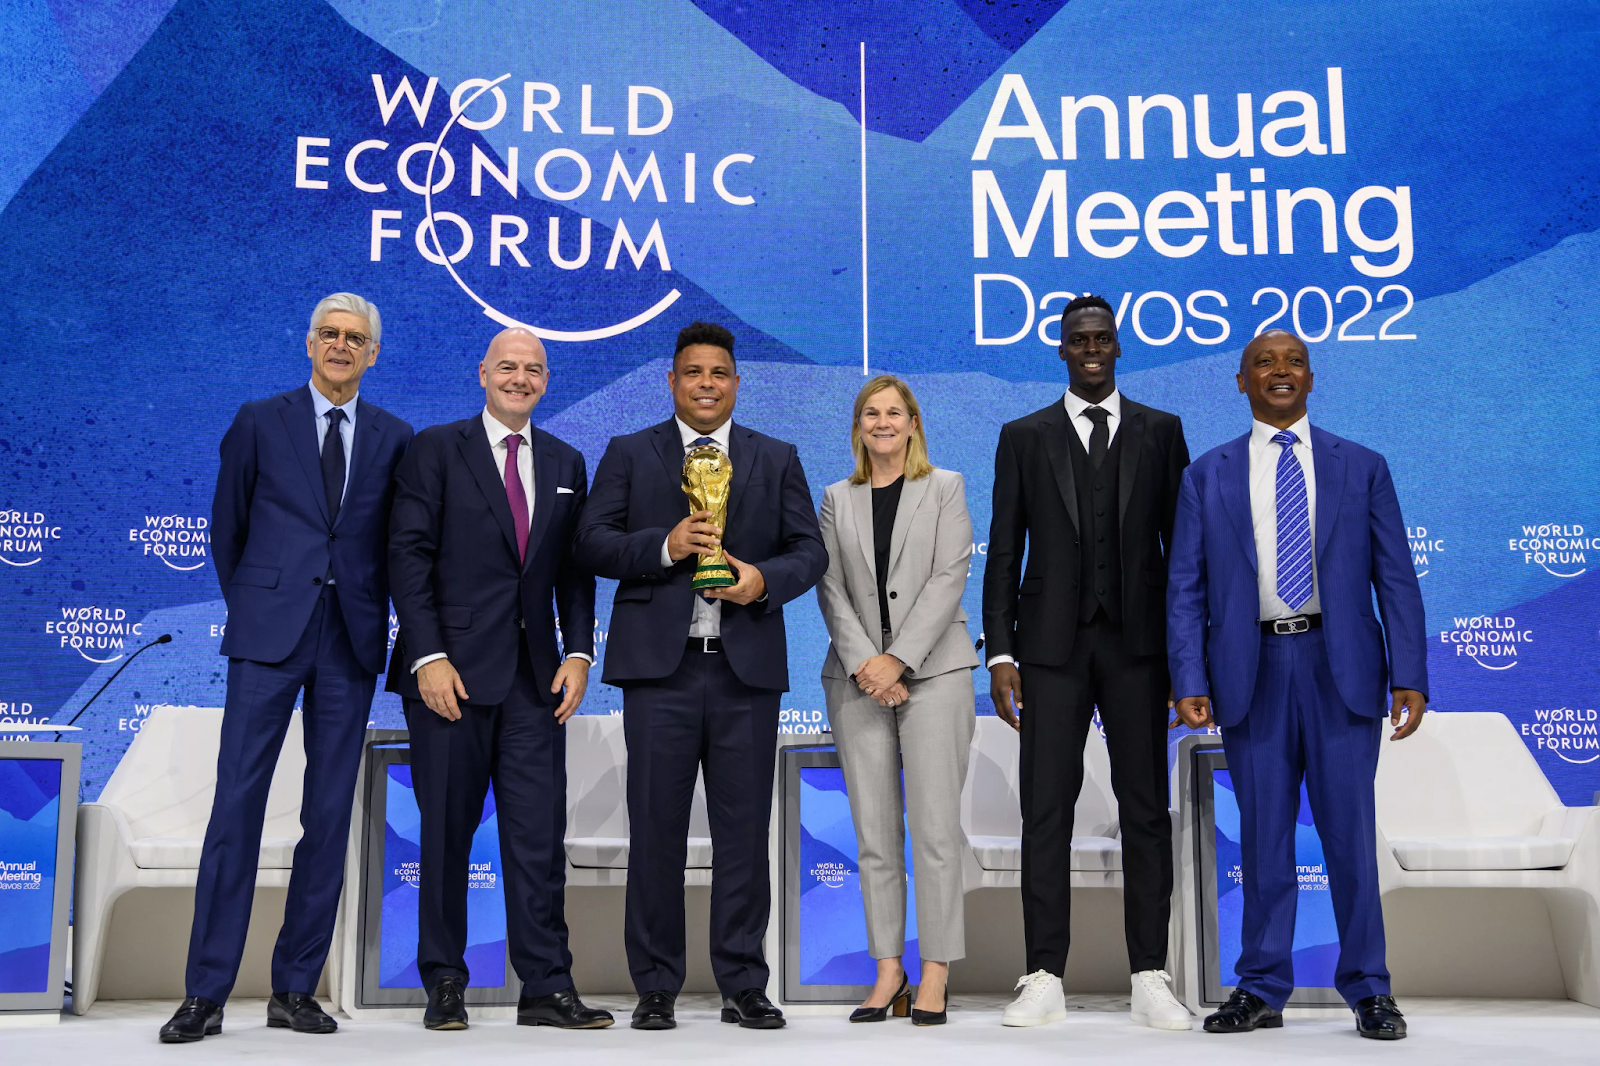 Blog - World Economic Forum 2022 Presenters